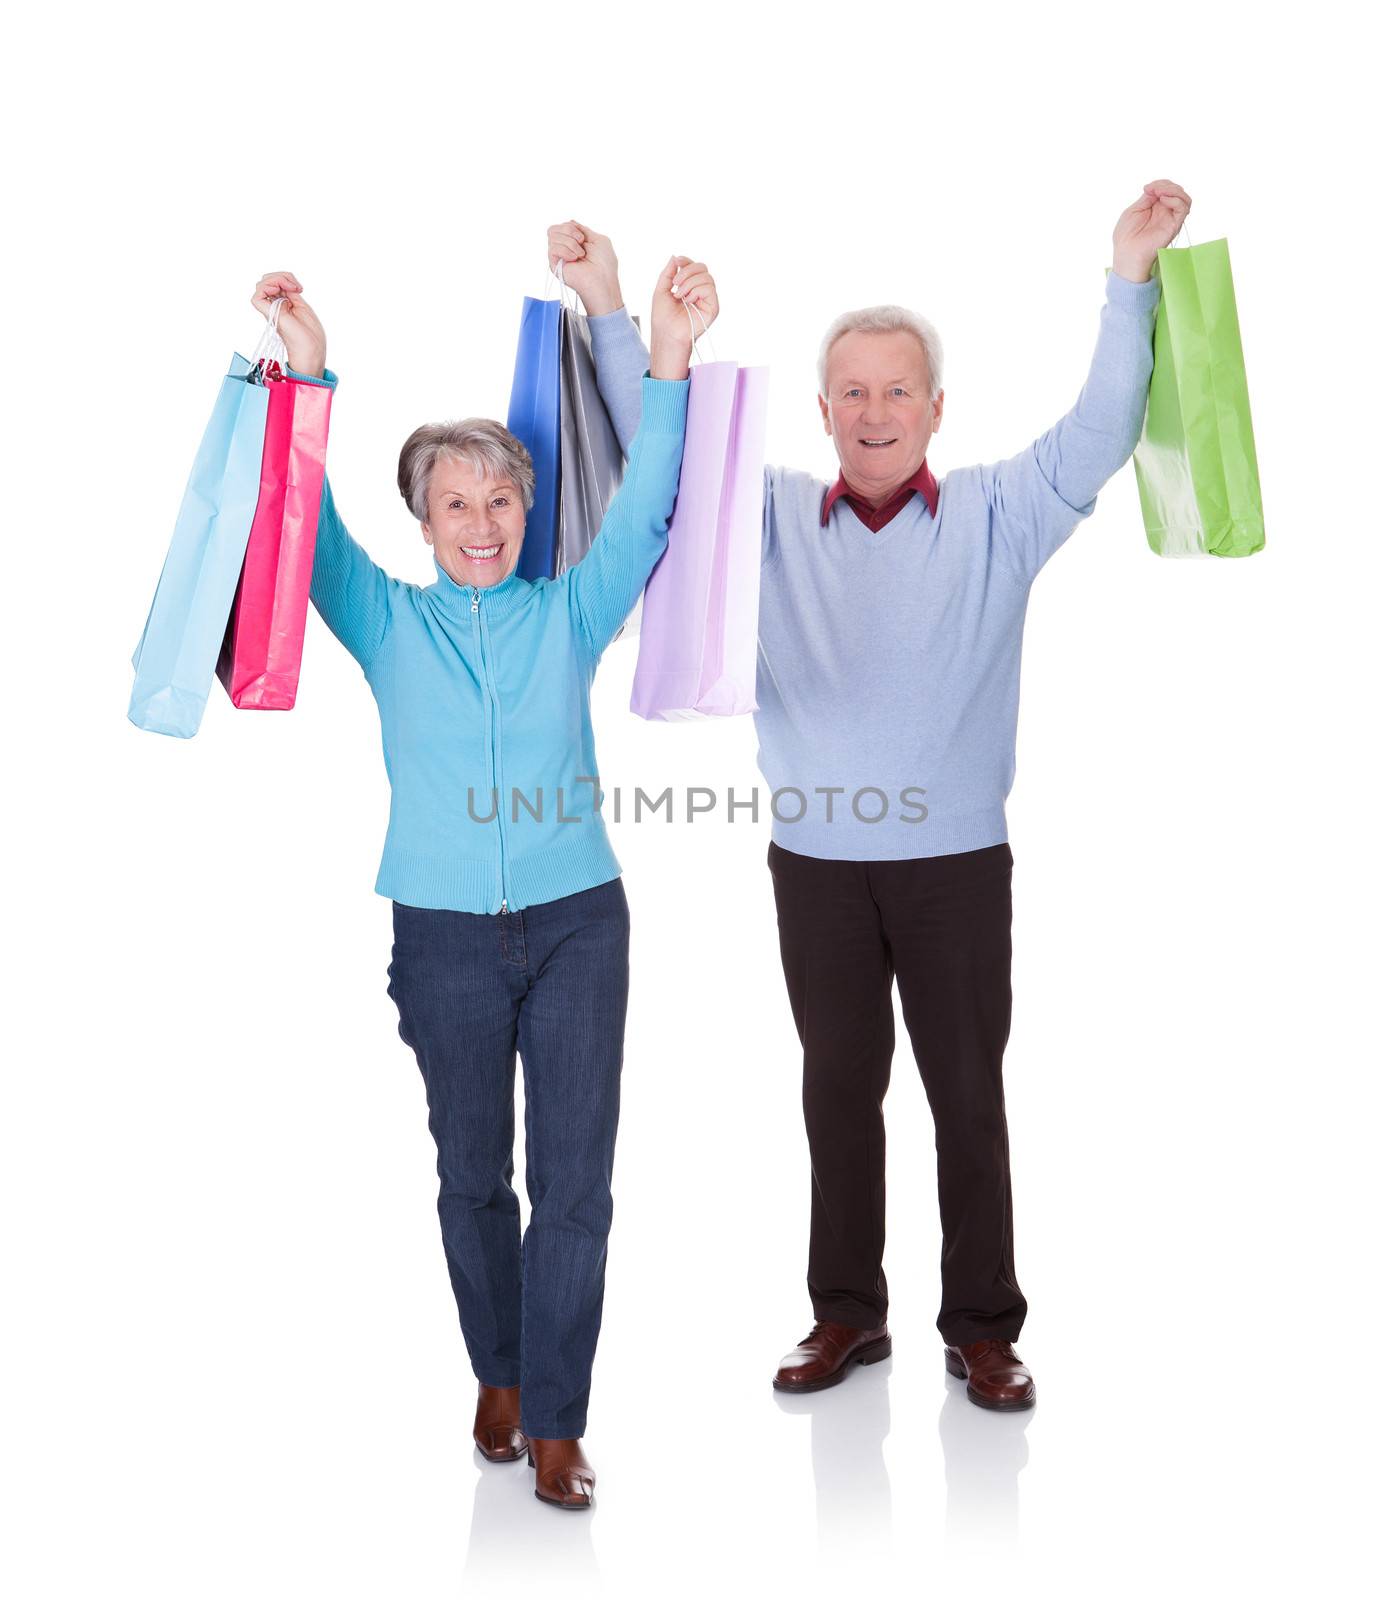 Portrait Of Happy Senior Couple Holding Shopping Bags